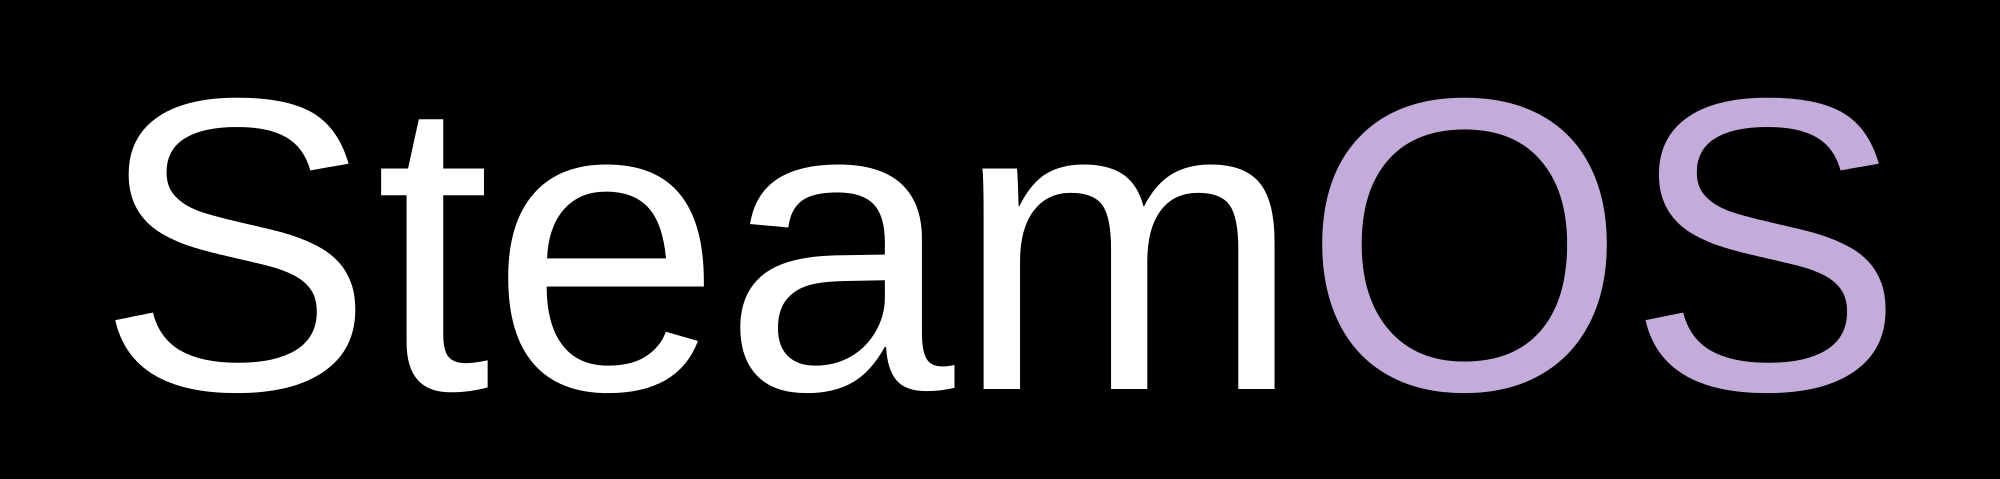 steamOS logo